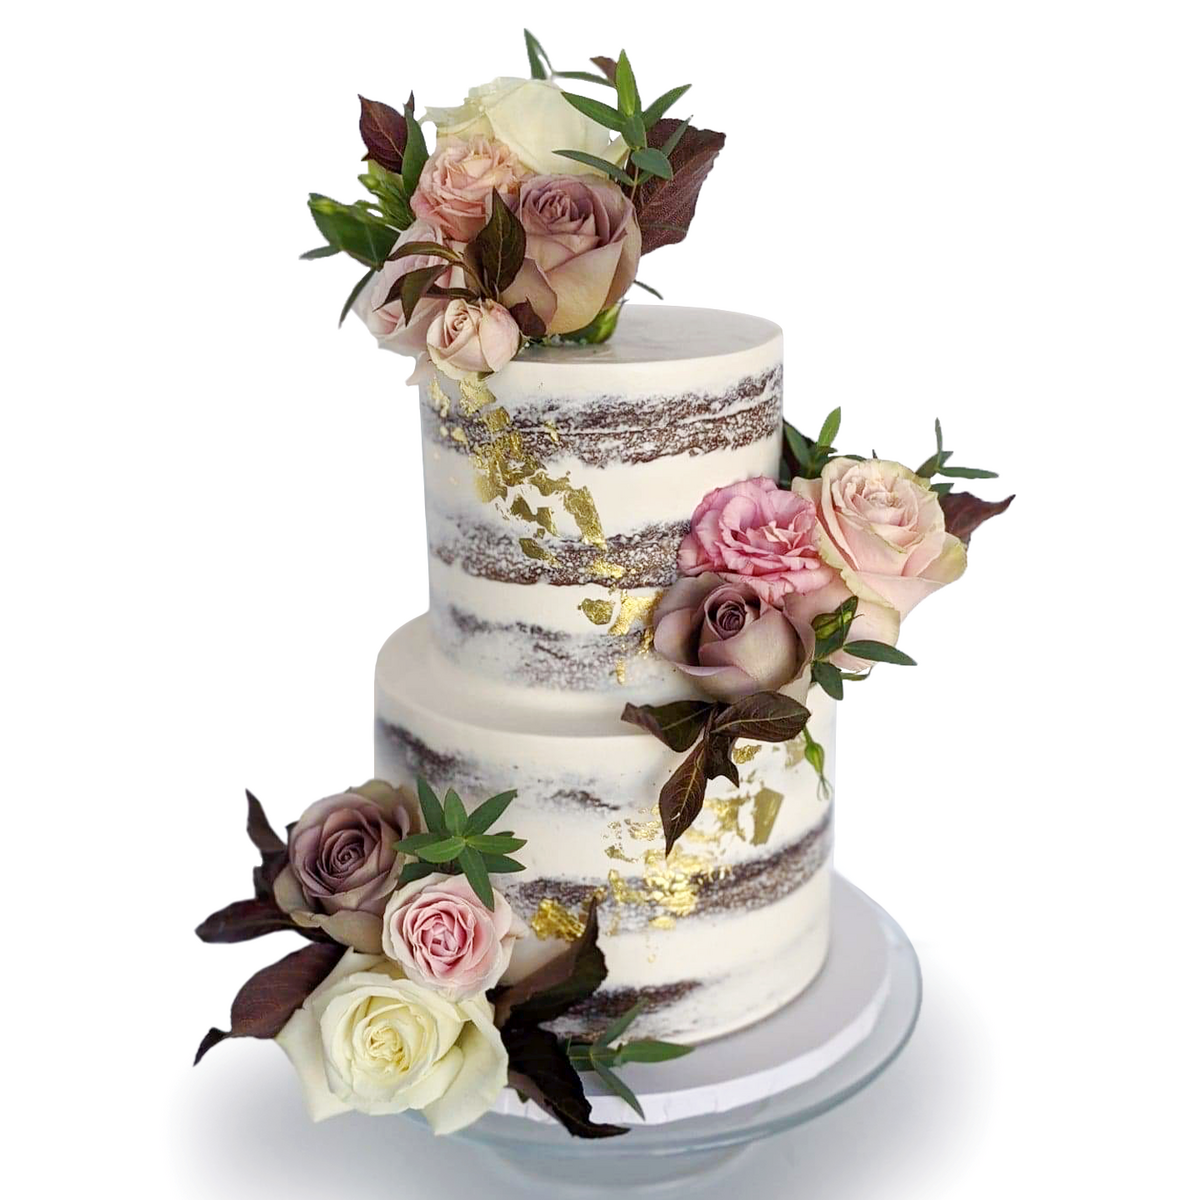 Whippt Kitchen - wedding cake Aug 2020 2